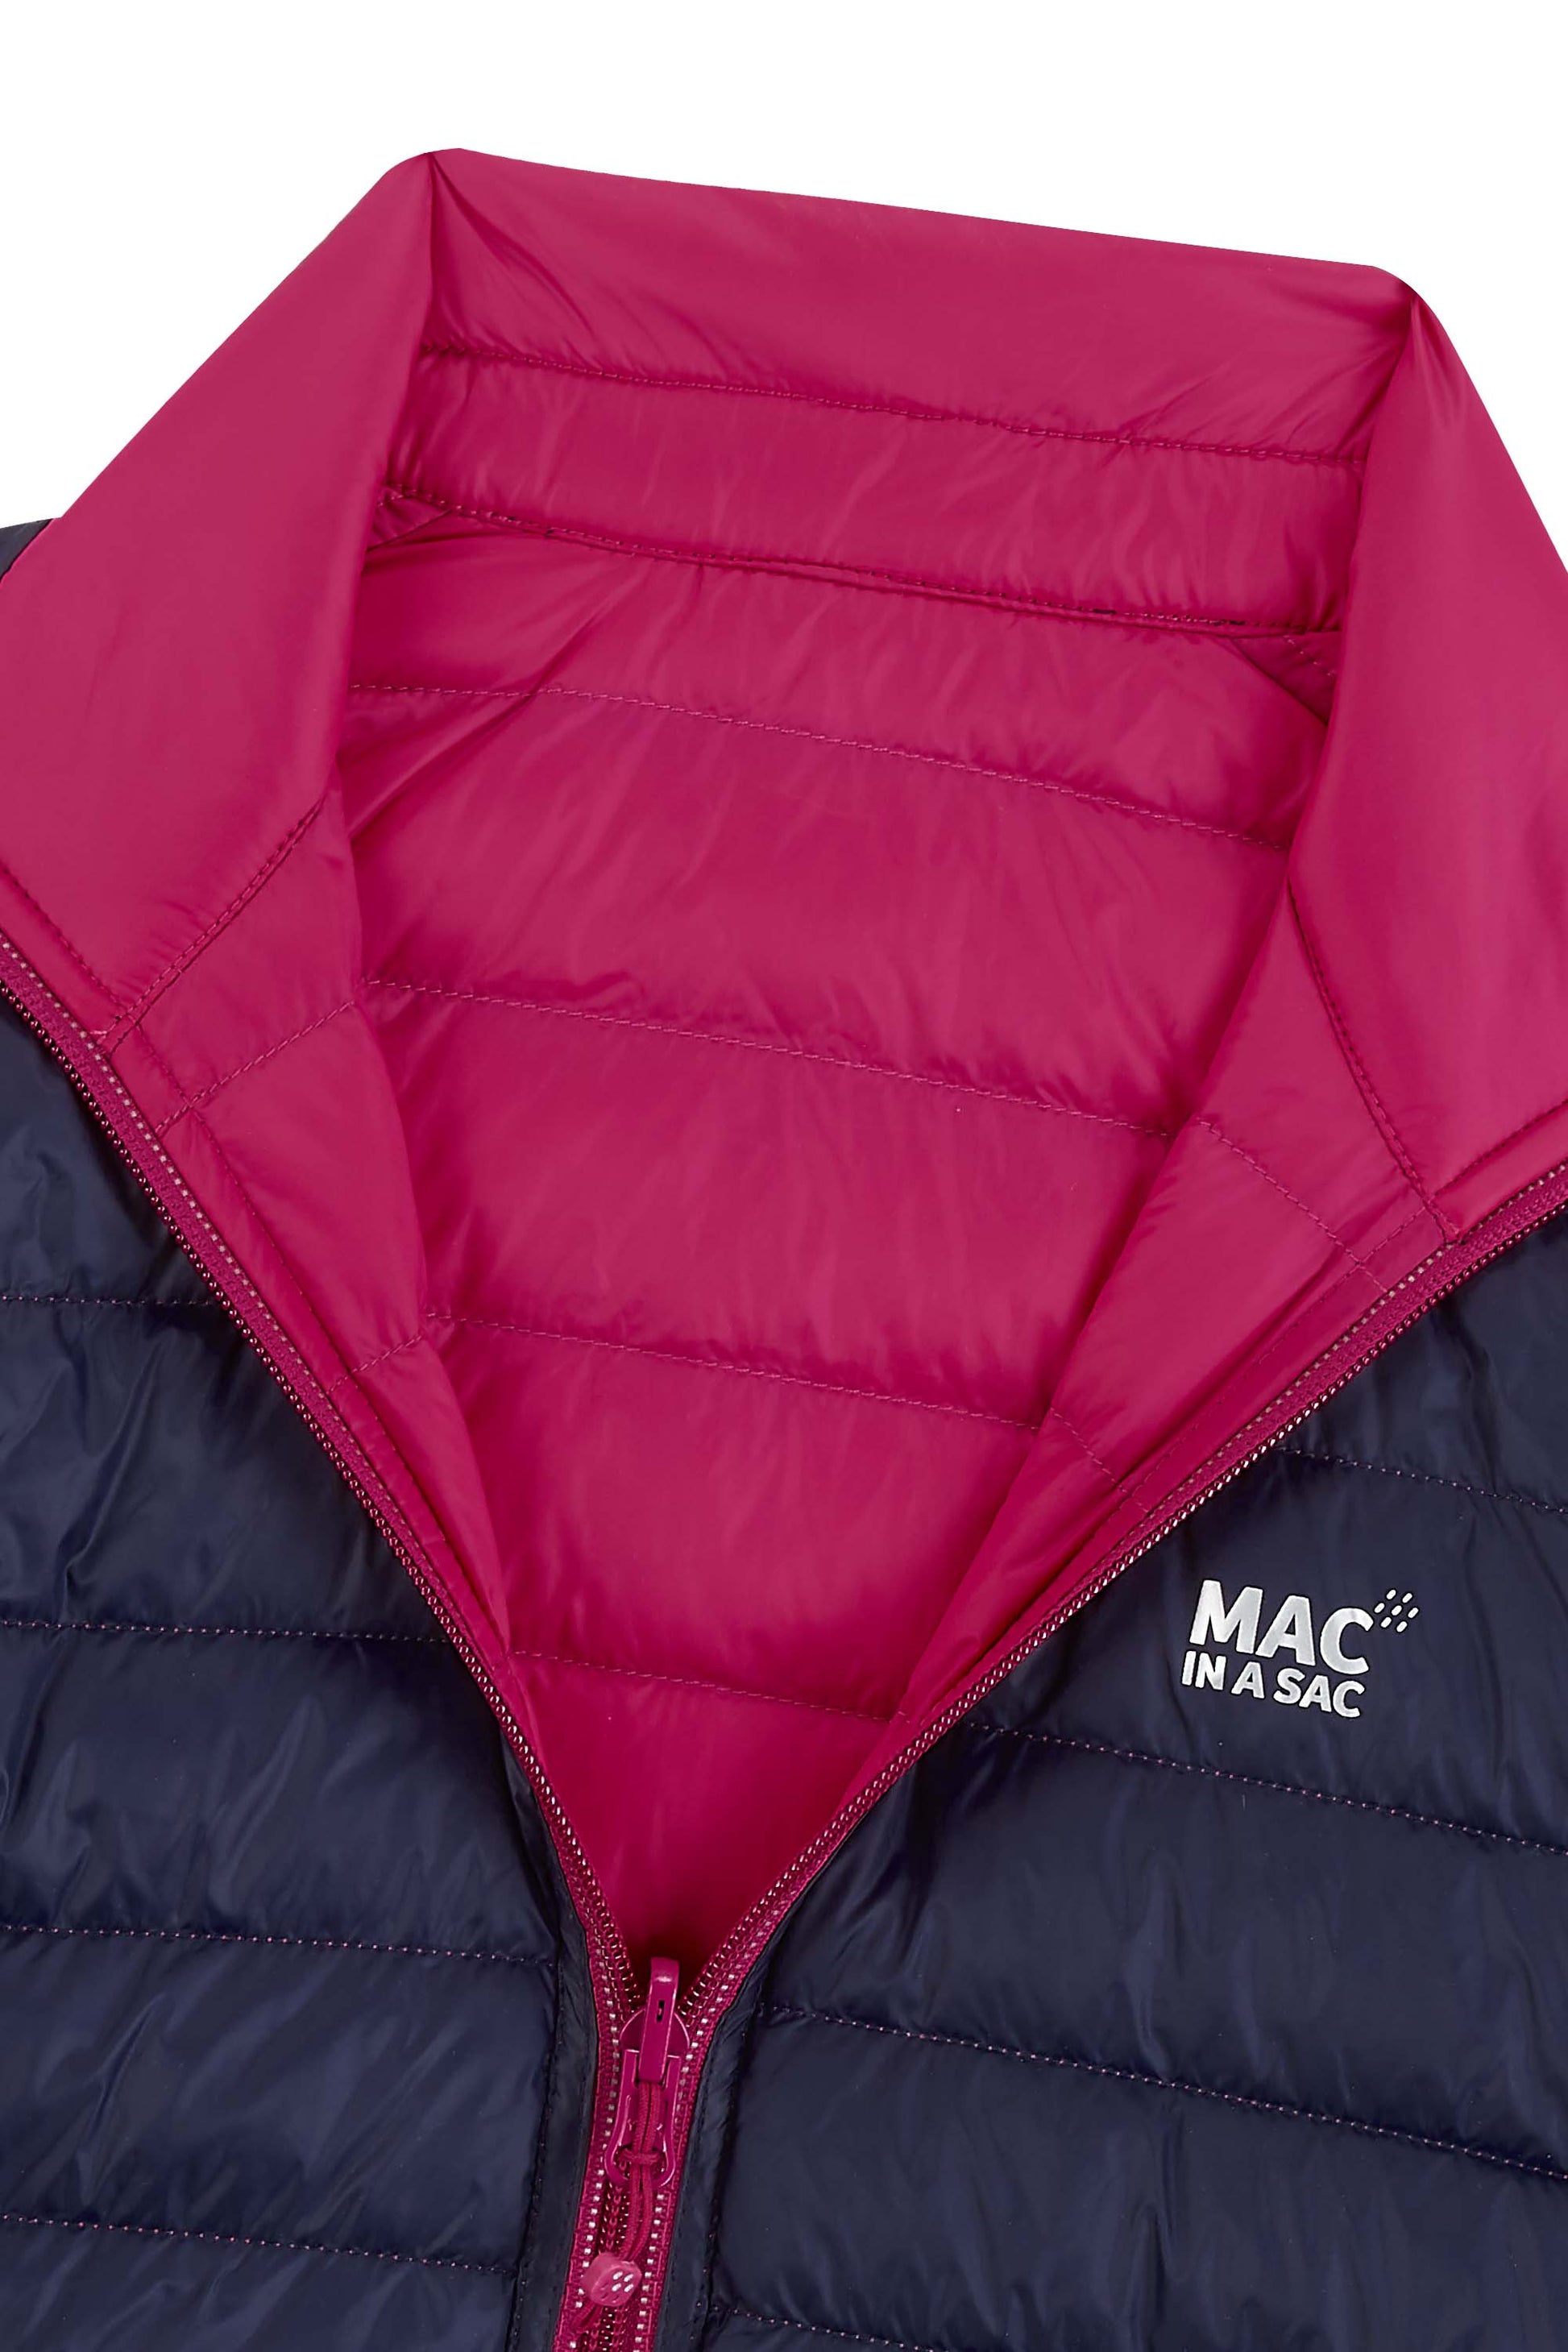 Mac In A Sac Polar2 Down Reversible (Ladies) - Fuchsia/Navy